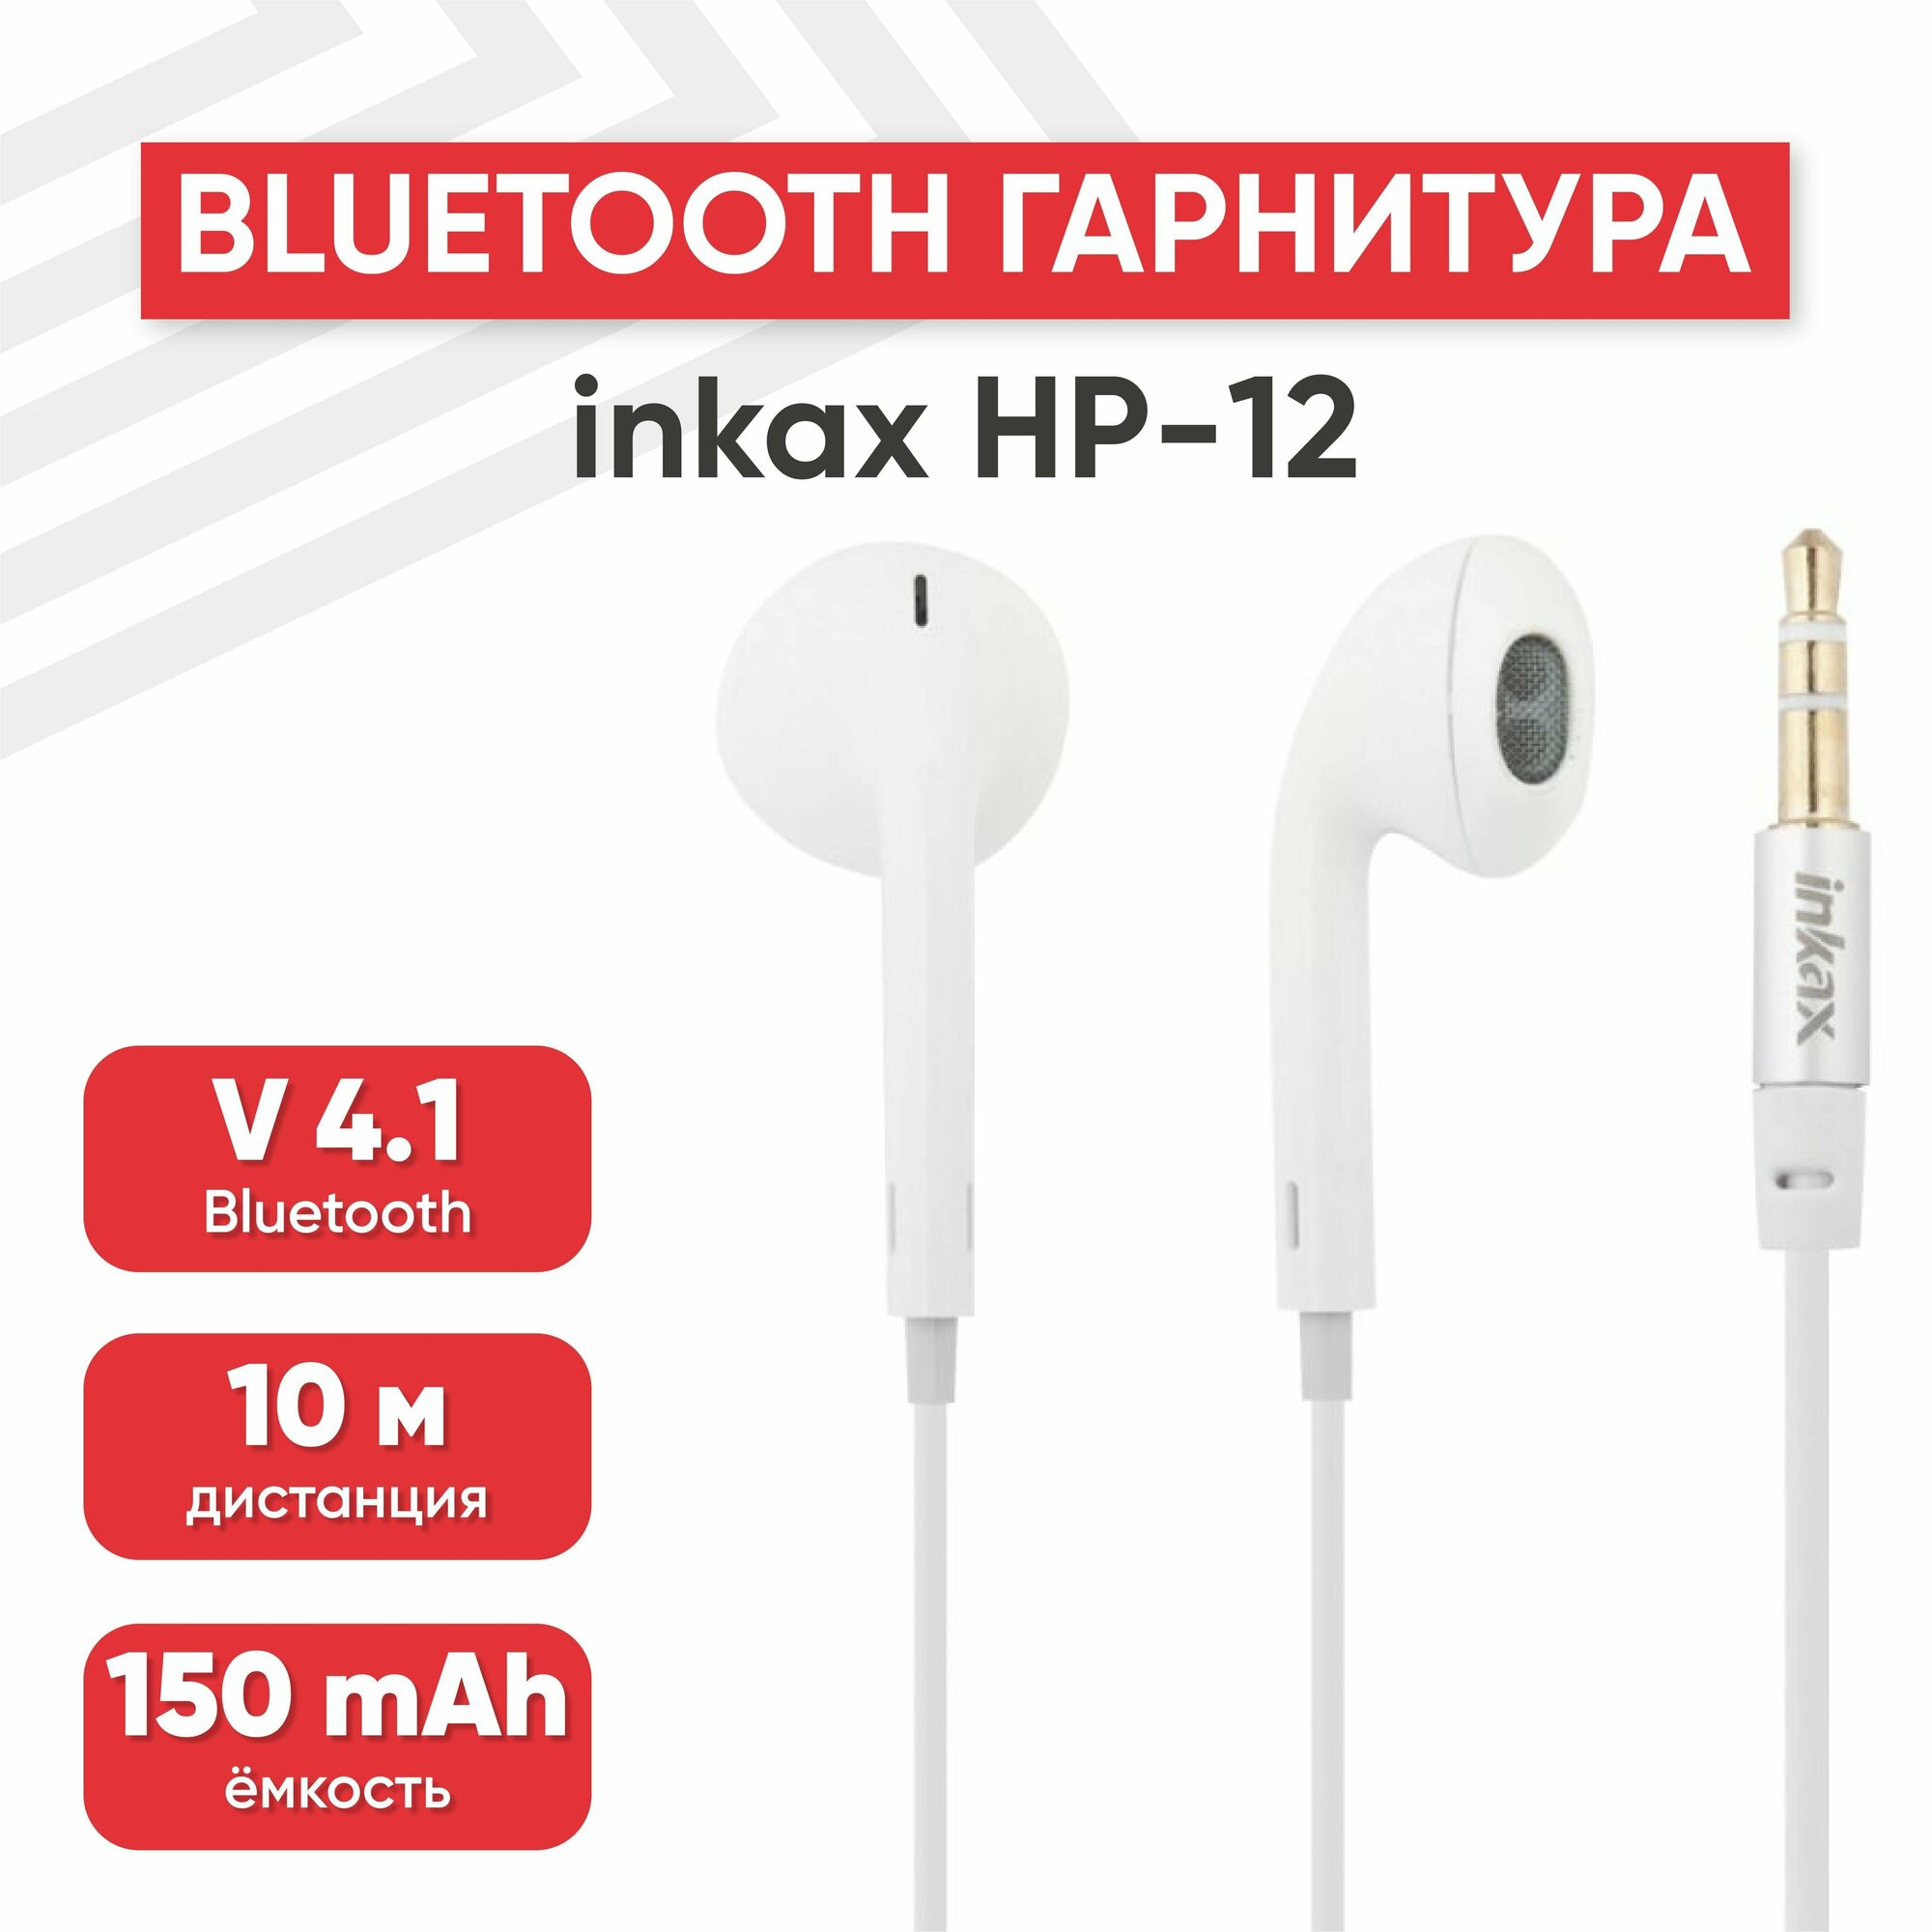 Bluetooth гарнитура inkax HP-12 White-Collar BT 4.1, вкладыши, клипса-ресивер, белый